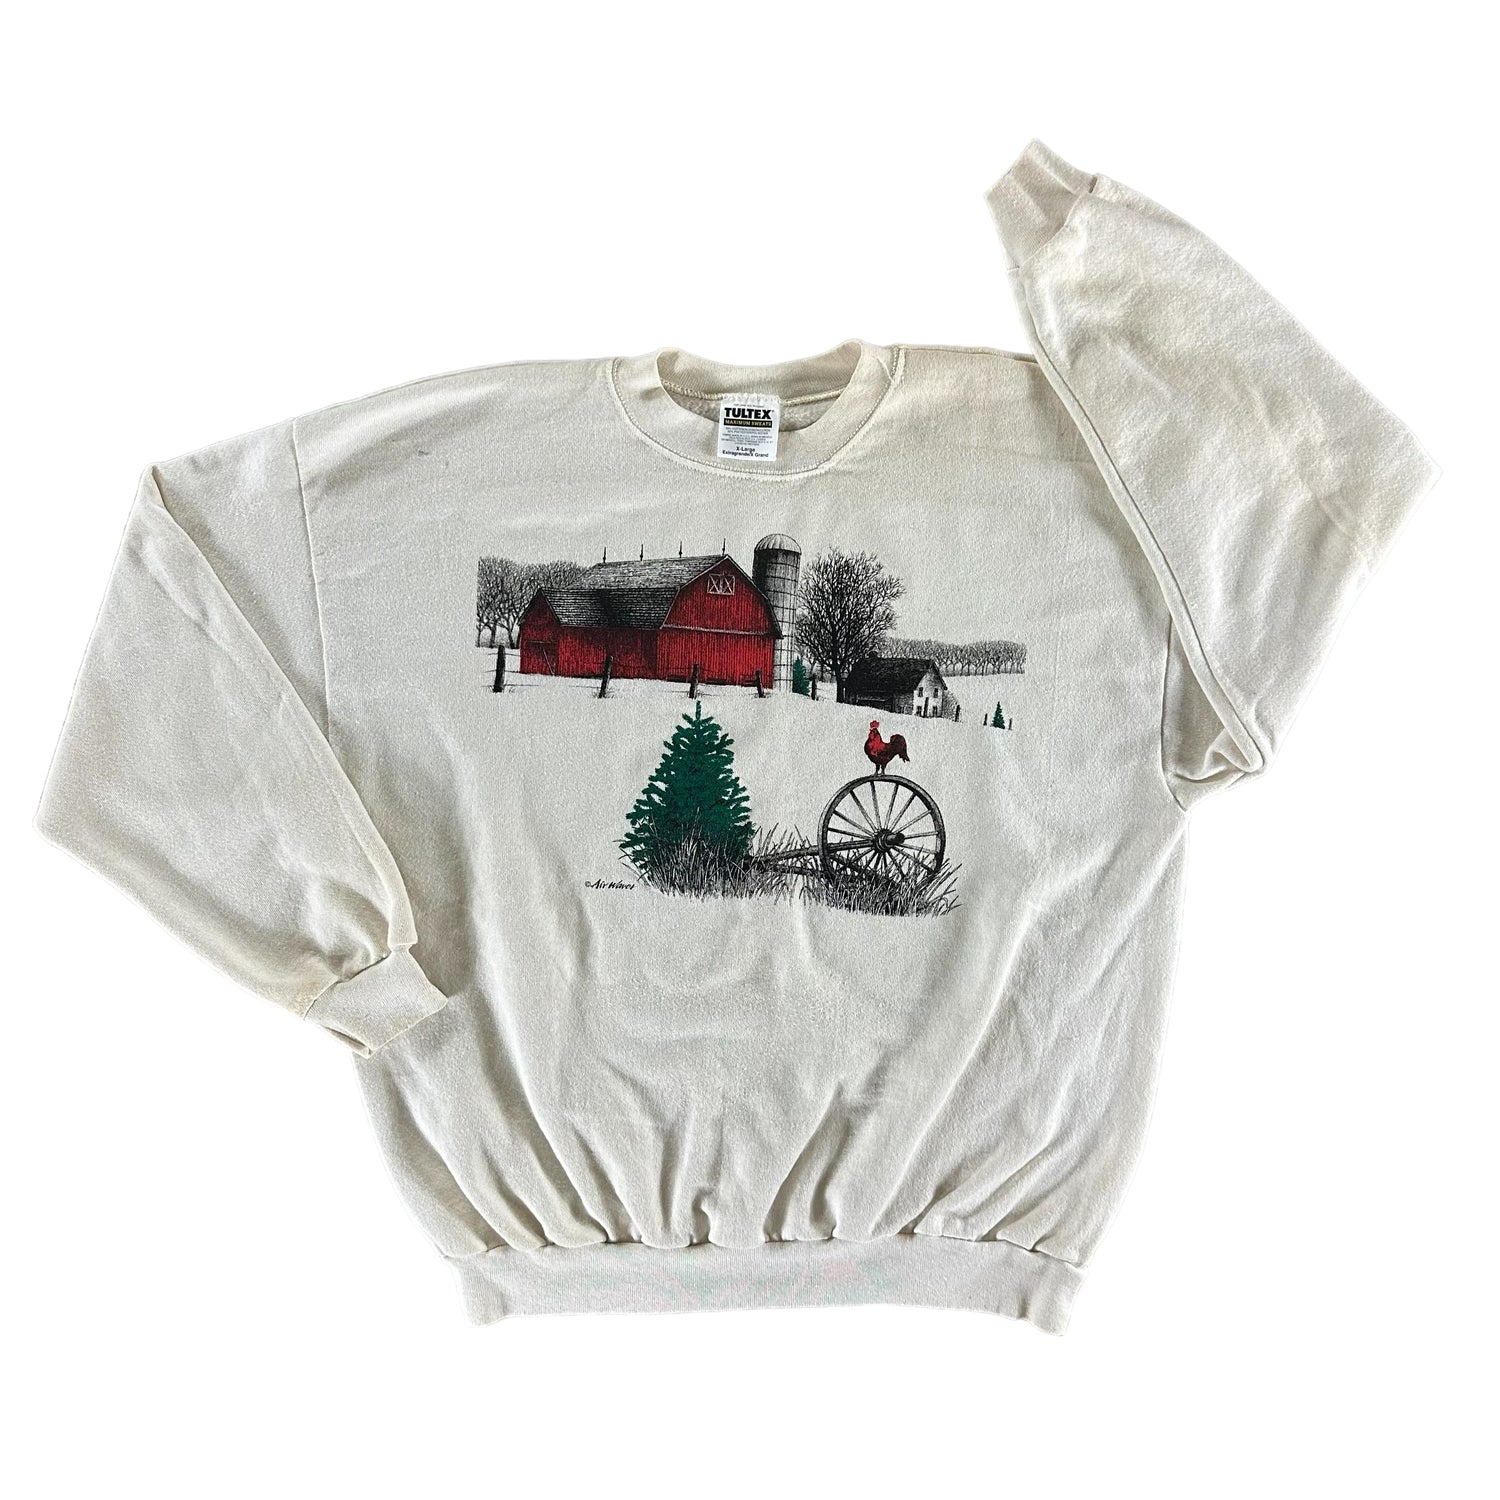 Vintage 1990s Barn Sweatshirt size XL